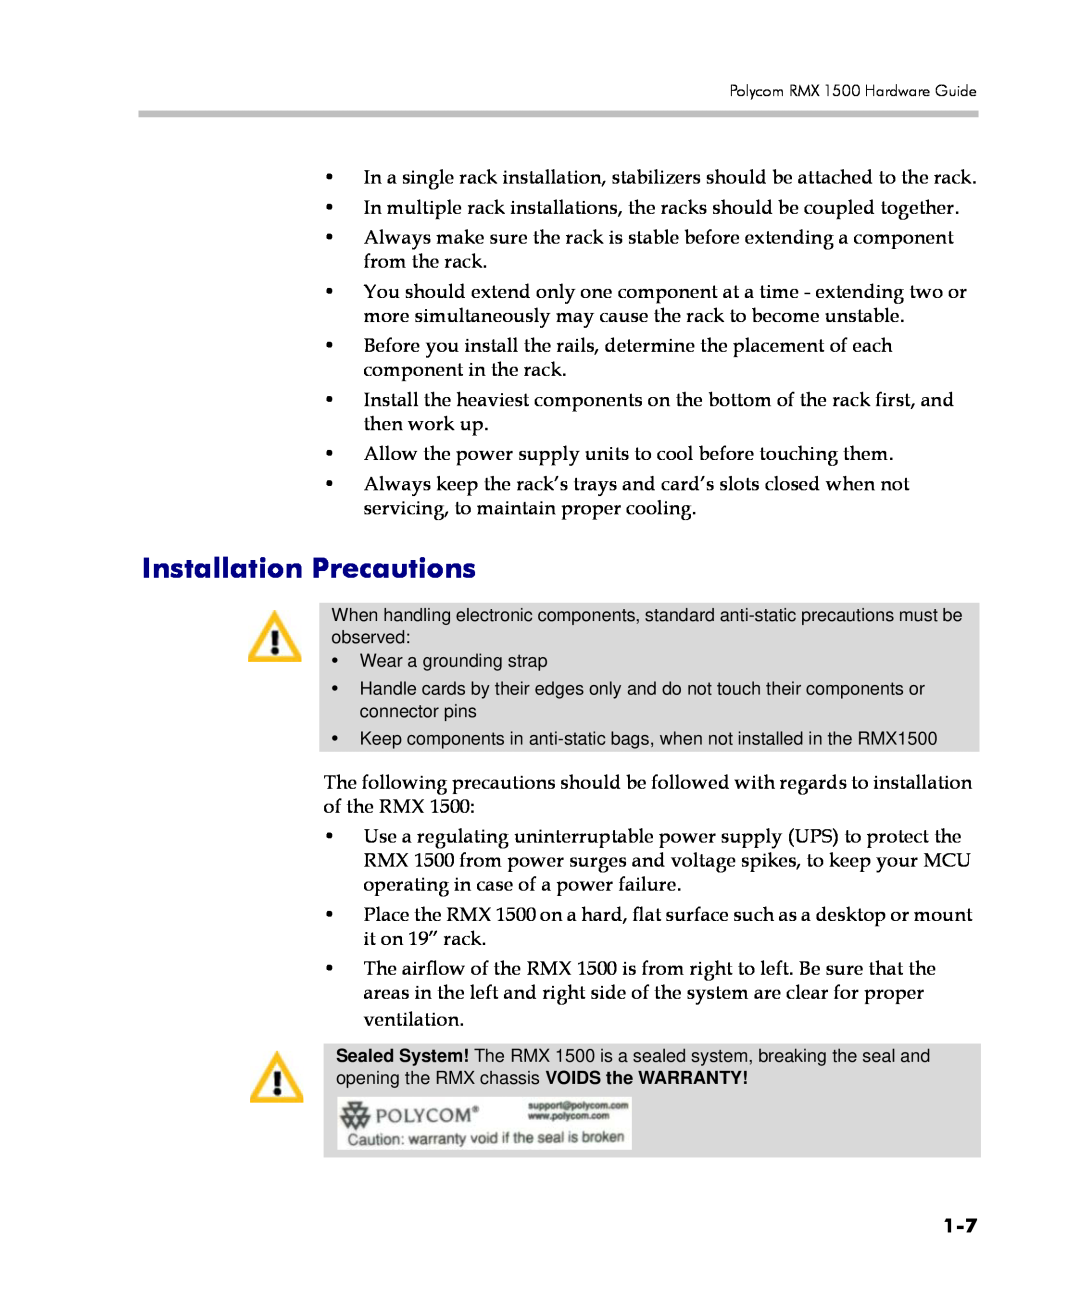 Polycom DOC2557C manual Installation Precautions 